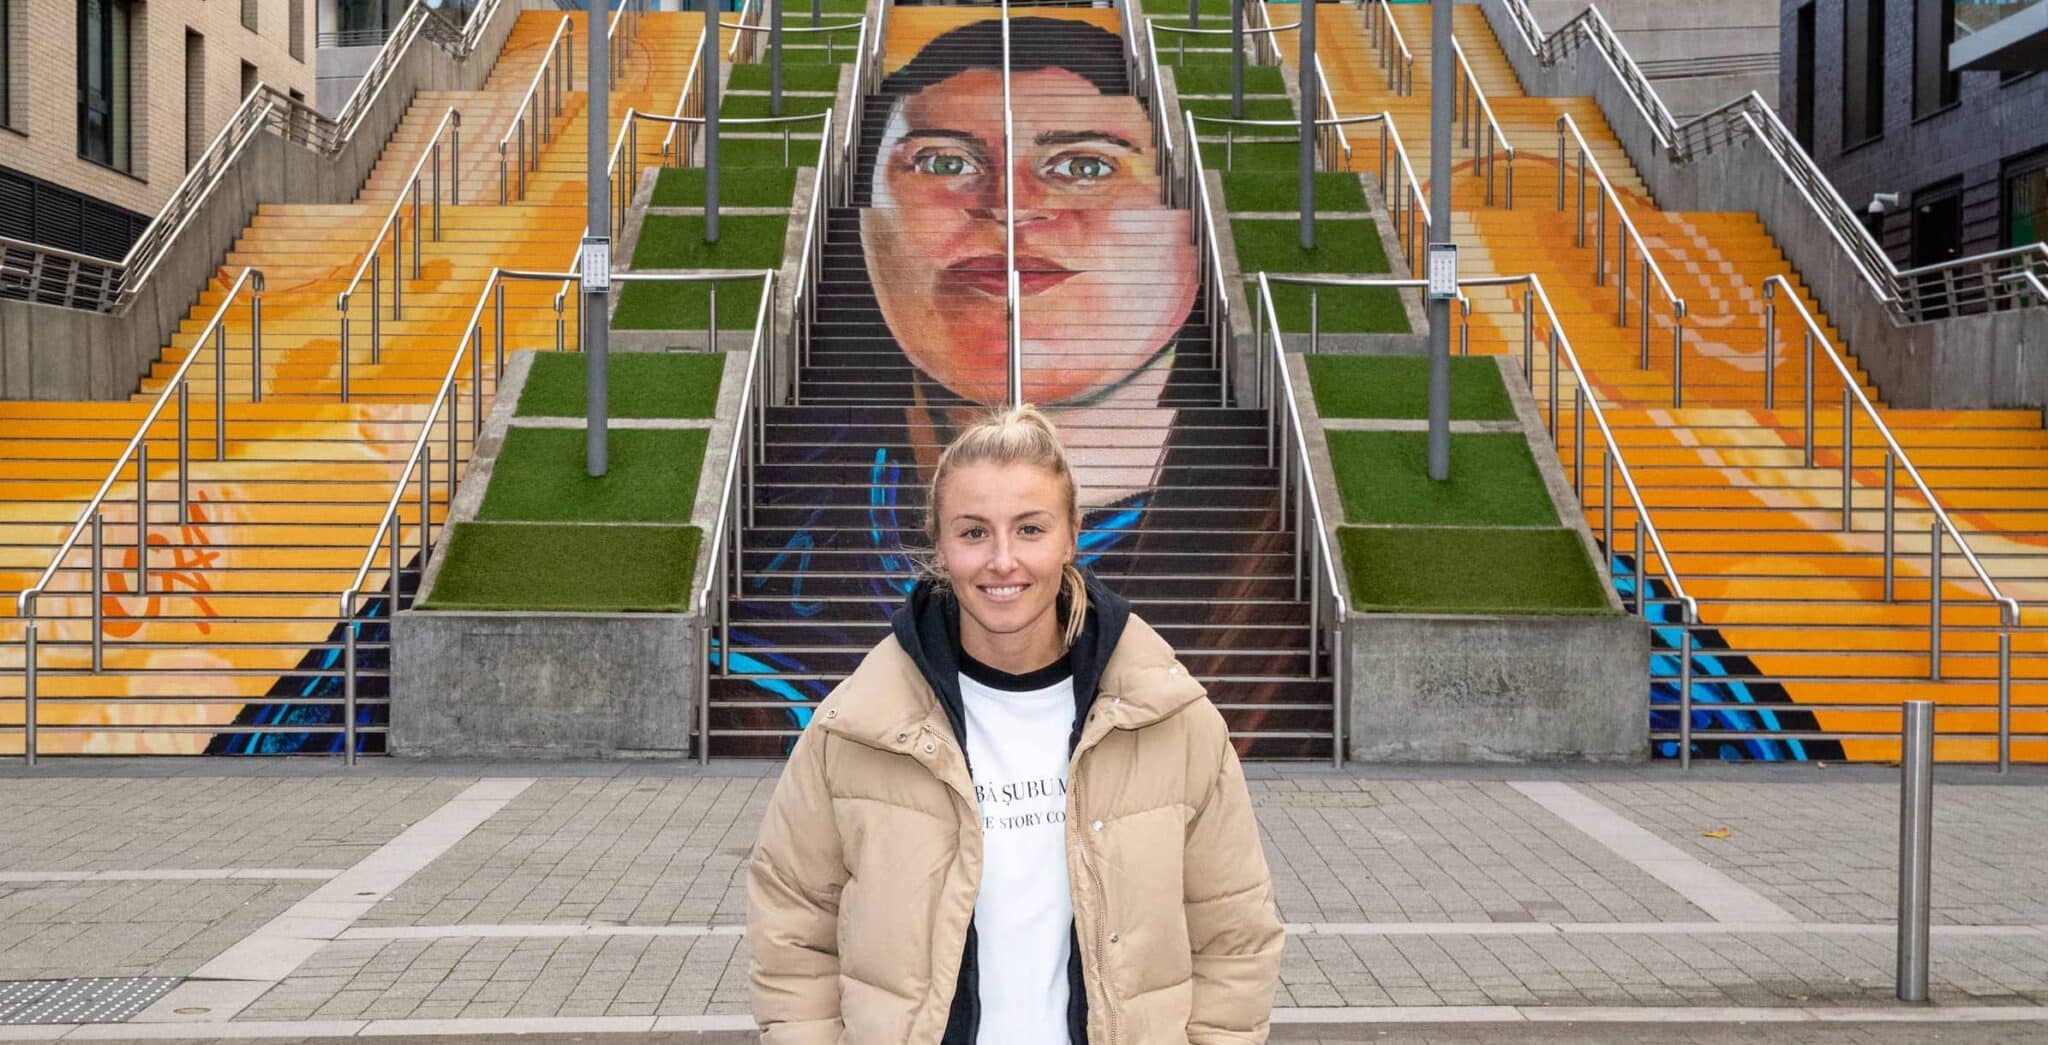 Leah williamson celebrates inclusive football spaces with tribute portrait unveiling at wembley stadium